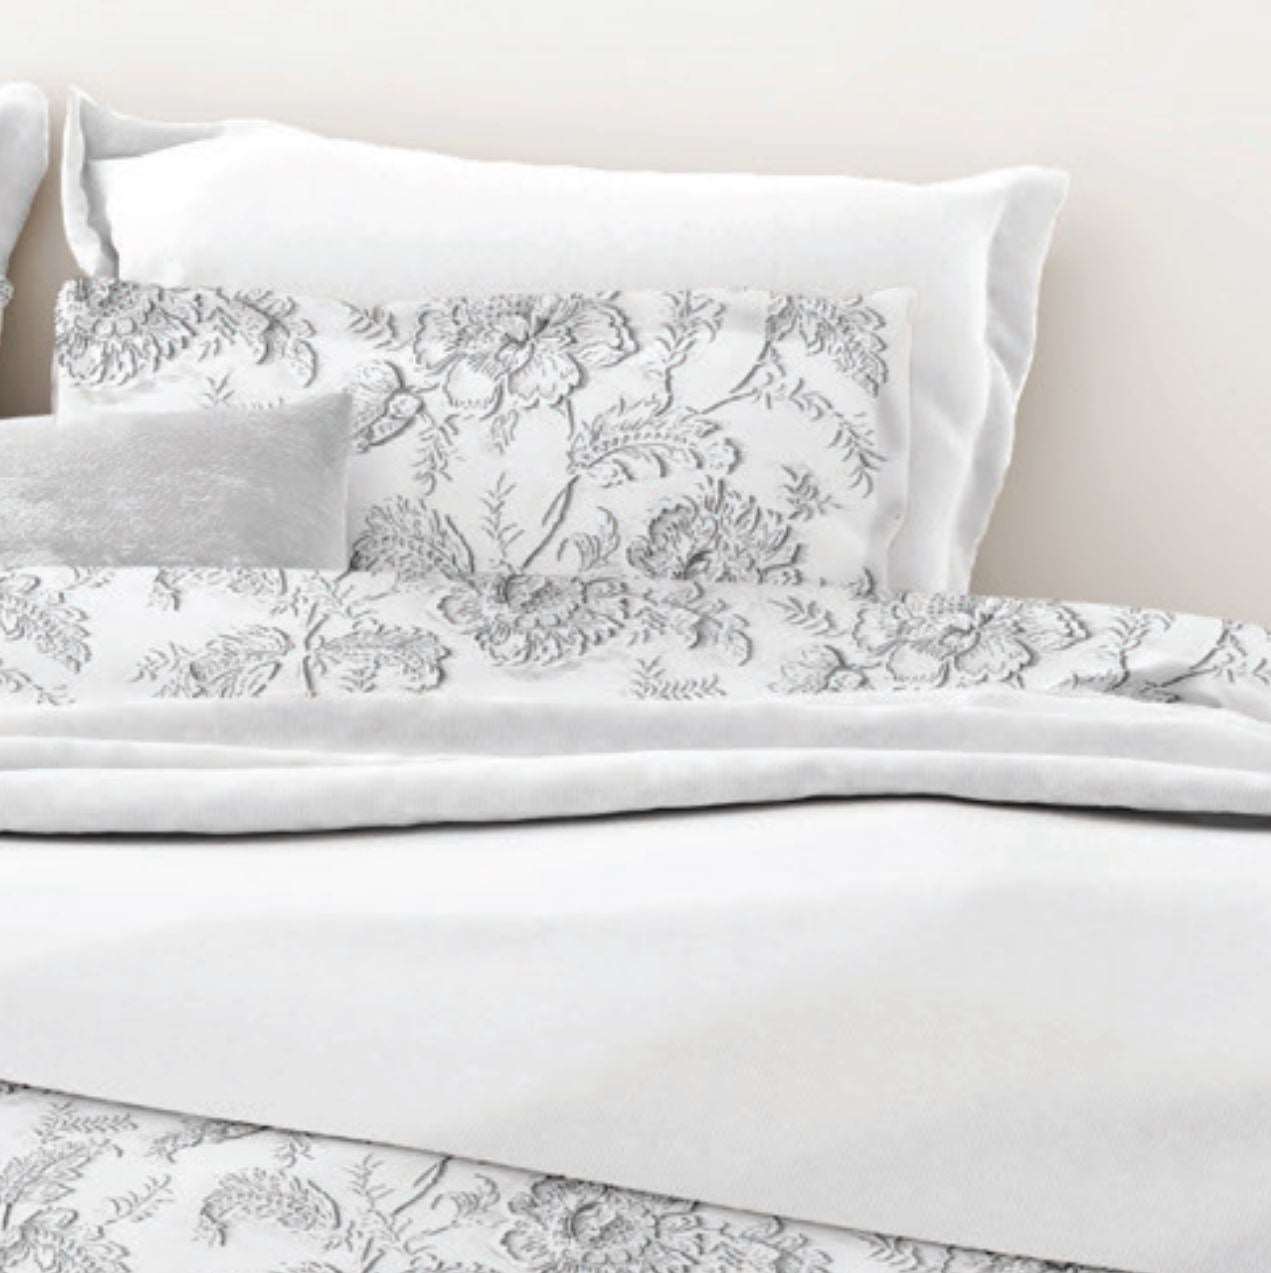 Light grey floral on a white background. Belledorm Ella Range 100% otton duvet set pillow cases